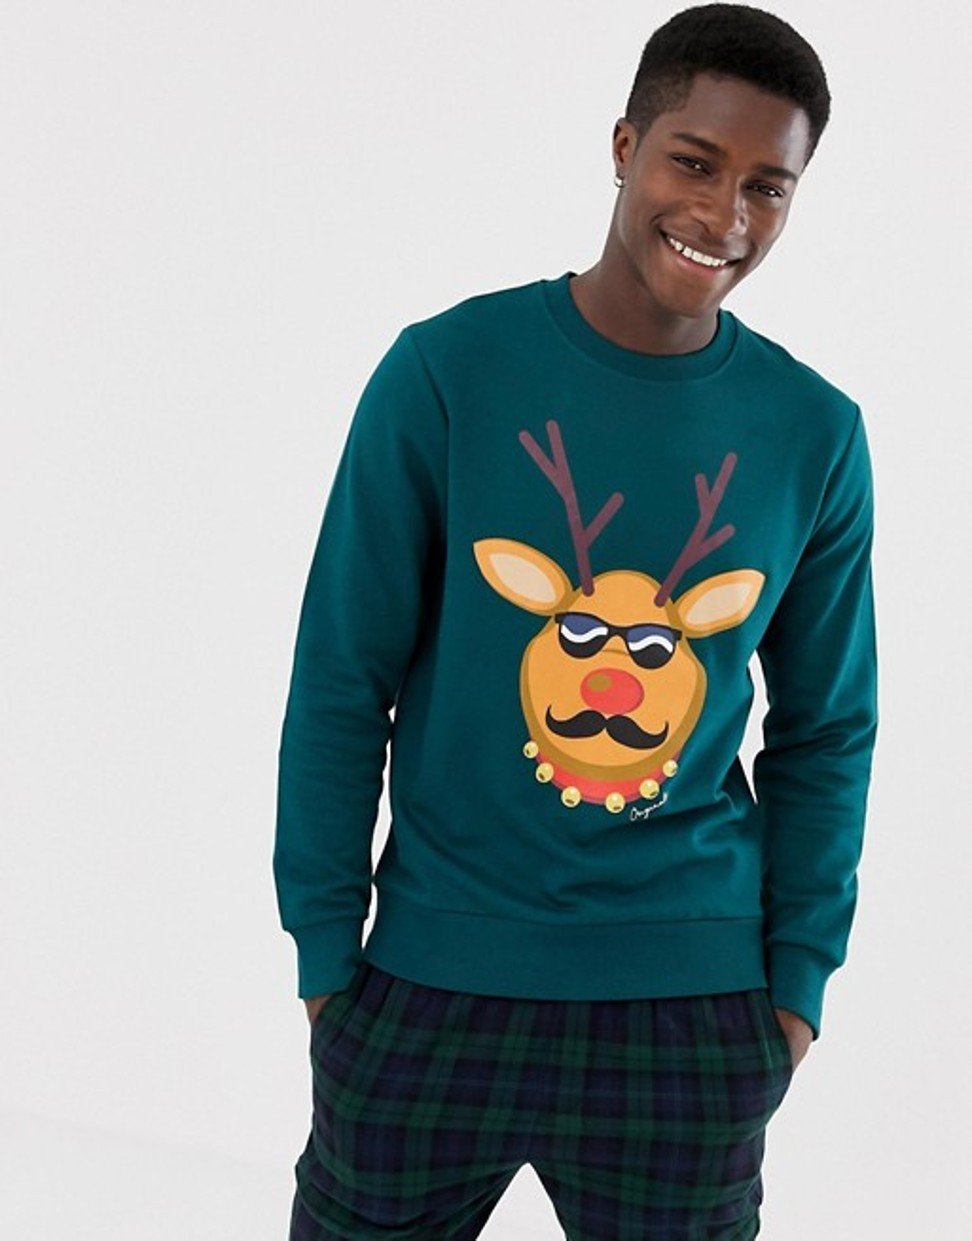 Jack & Jones Christmas jumper with reindeer print.